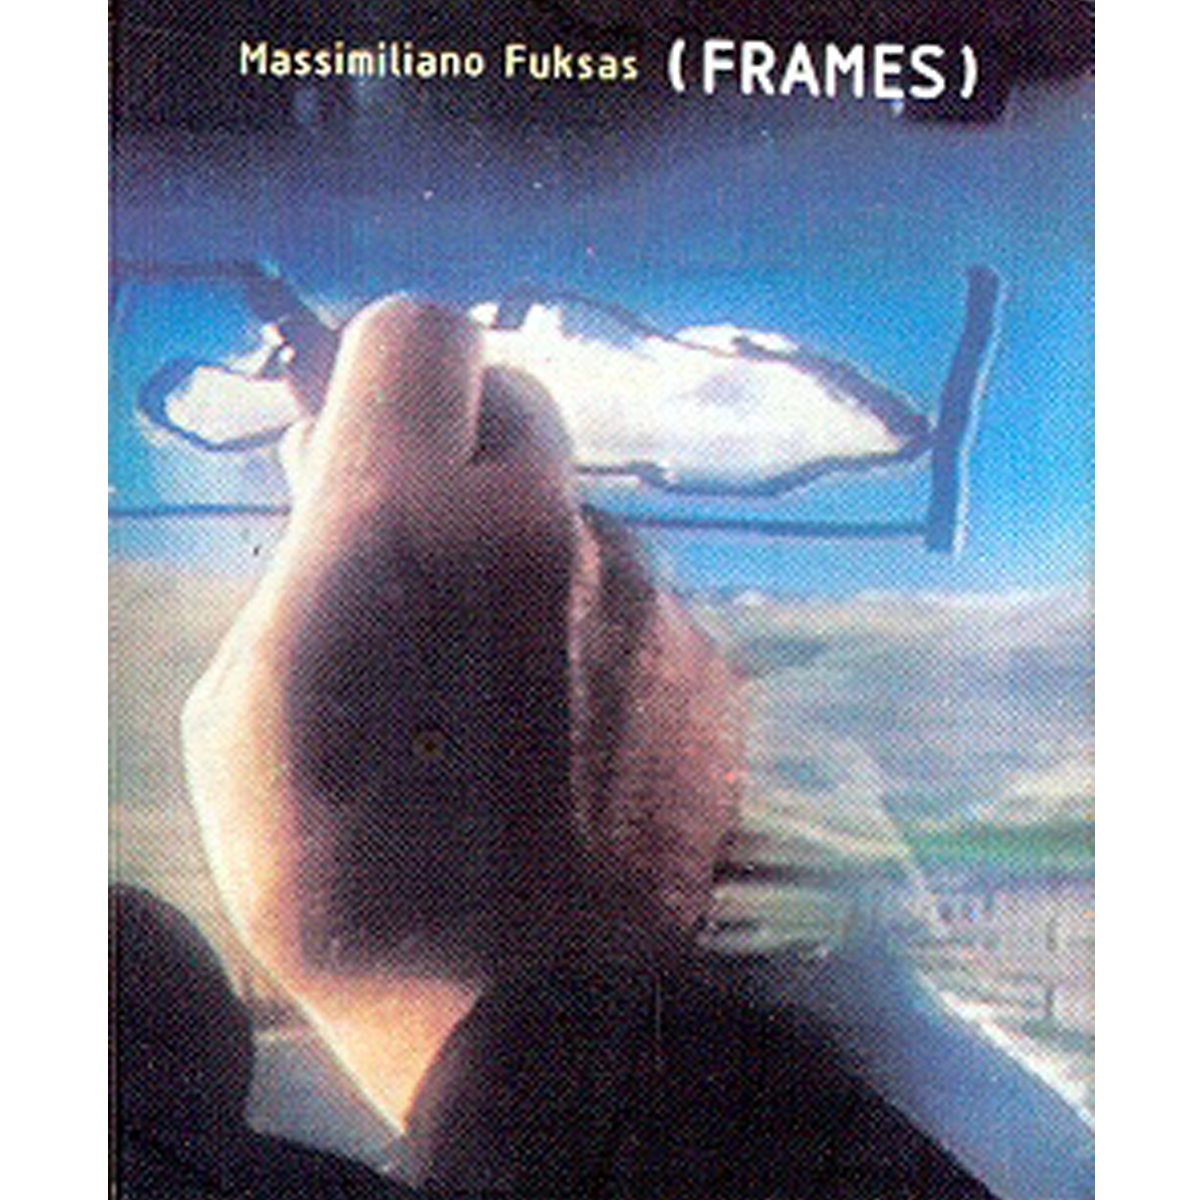 Massimiliano Fuksas (Frames)